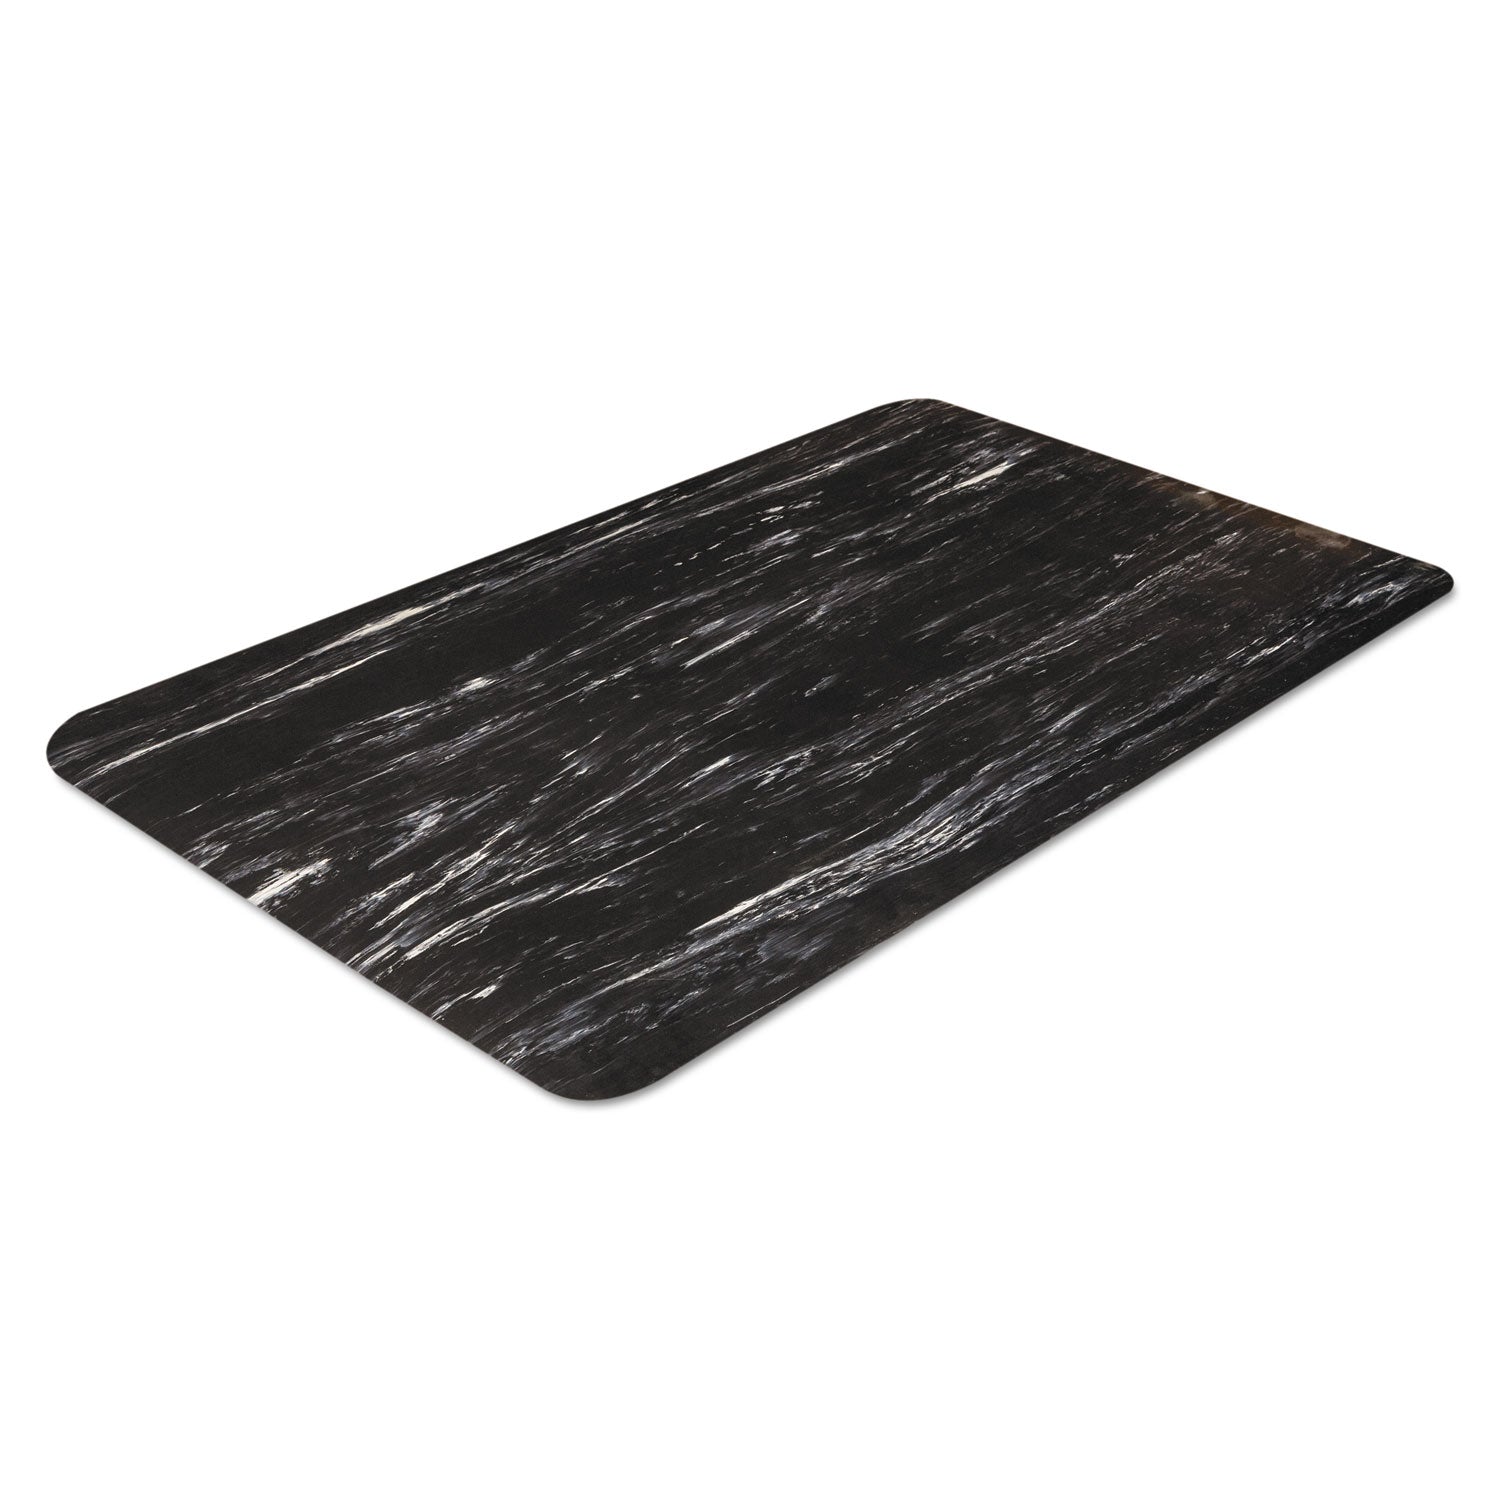 cushion-step-marbleized-rubber-mat-24-x-36-black_cwncu2436bk - 1